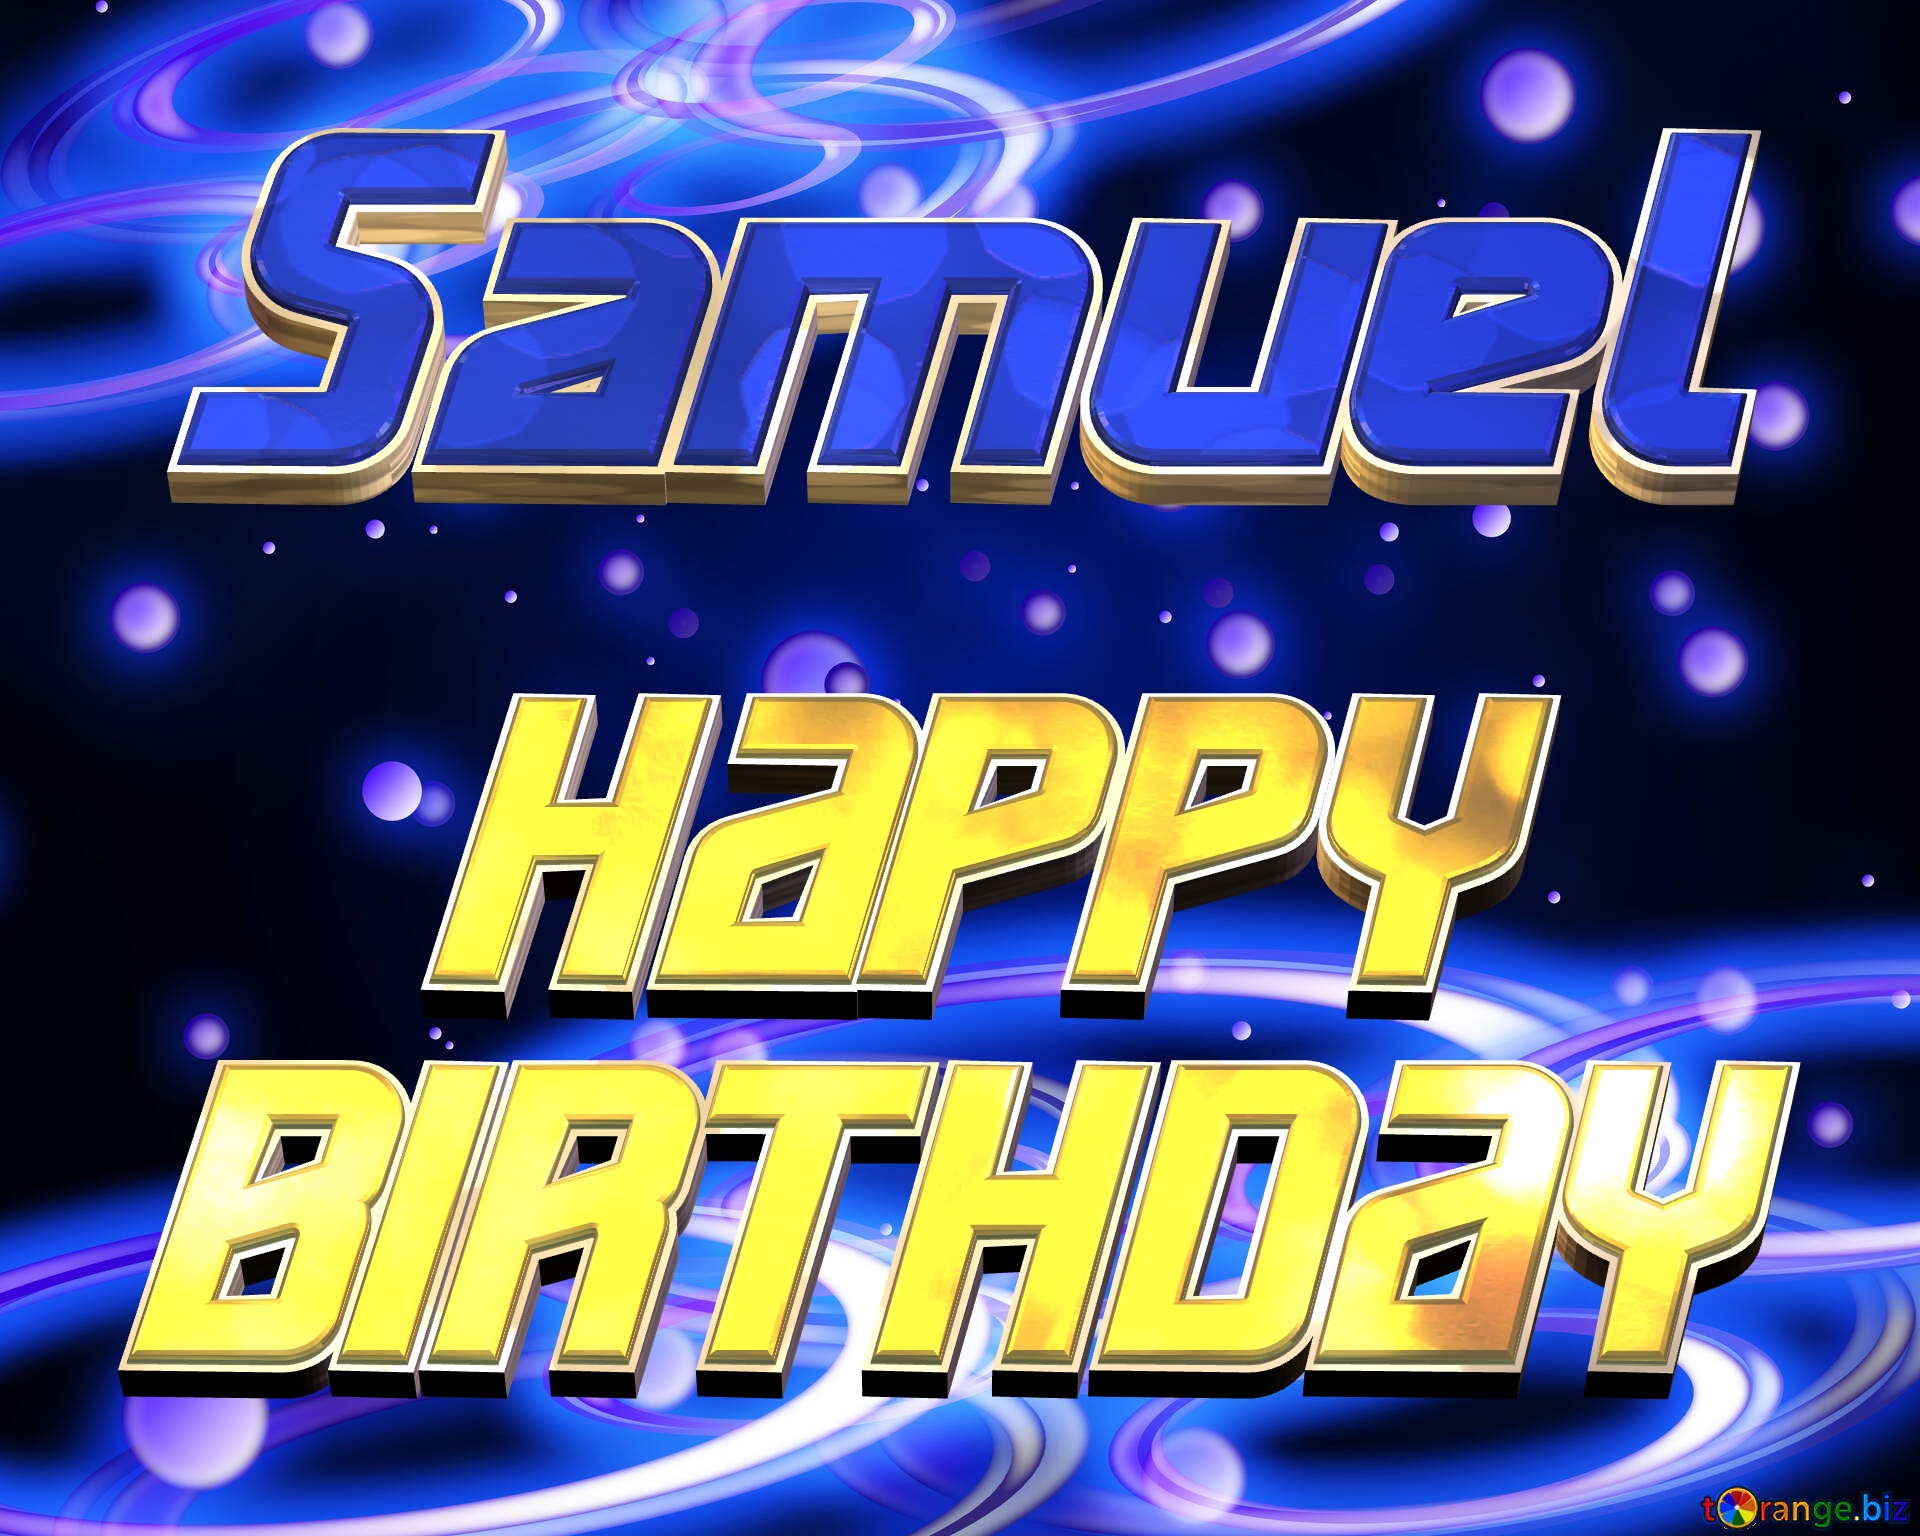 Samuel Space Happy Birthday! Technology background №54919